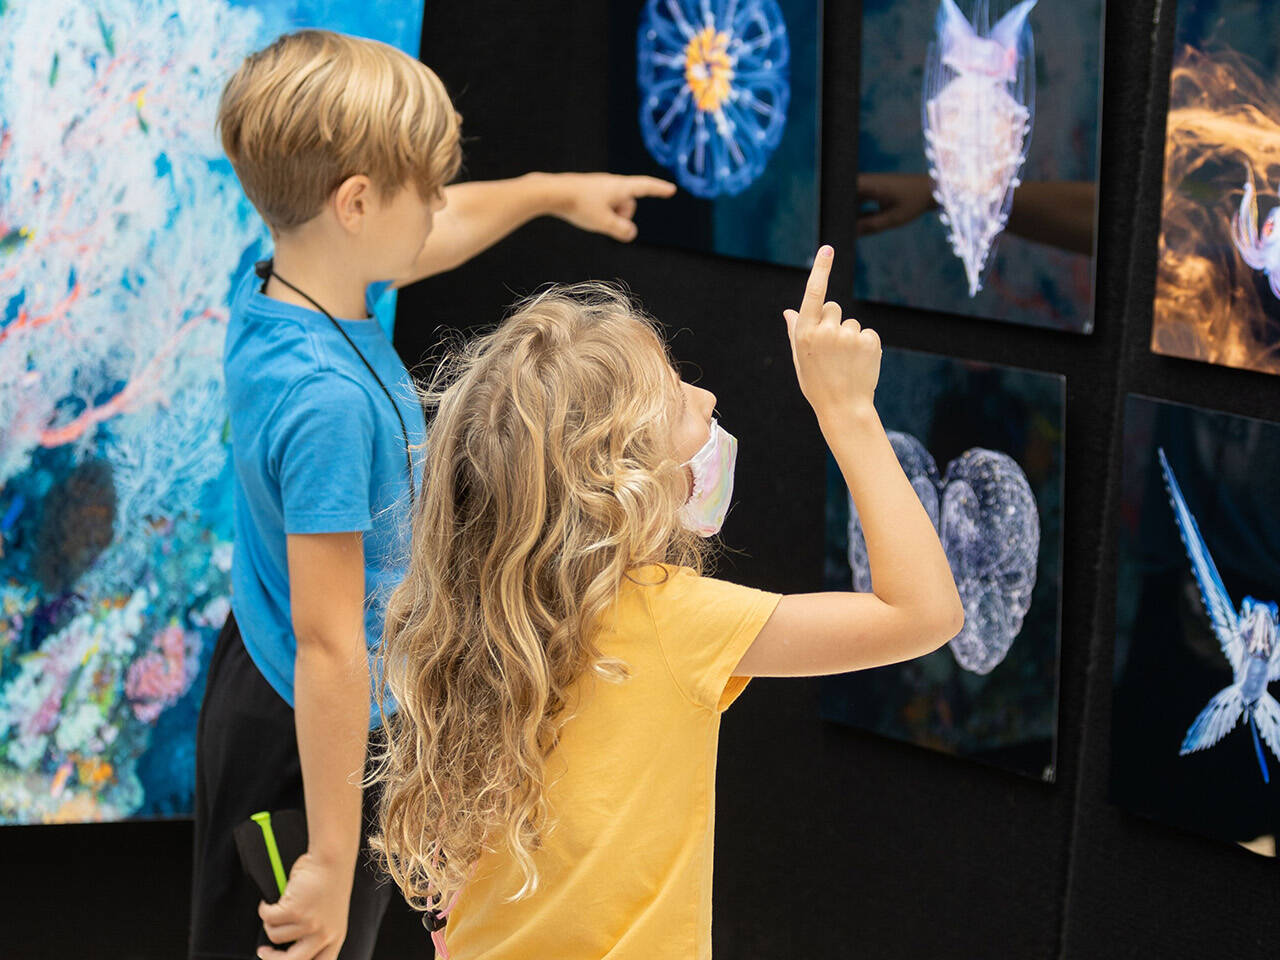 Children viewing art at Neptune's Art & Craft Show